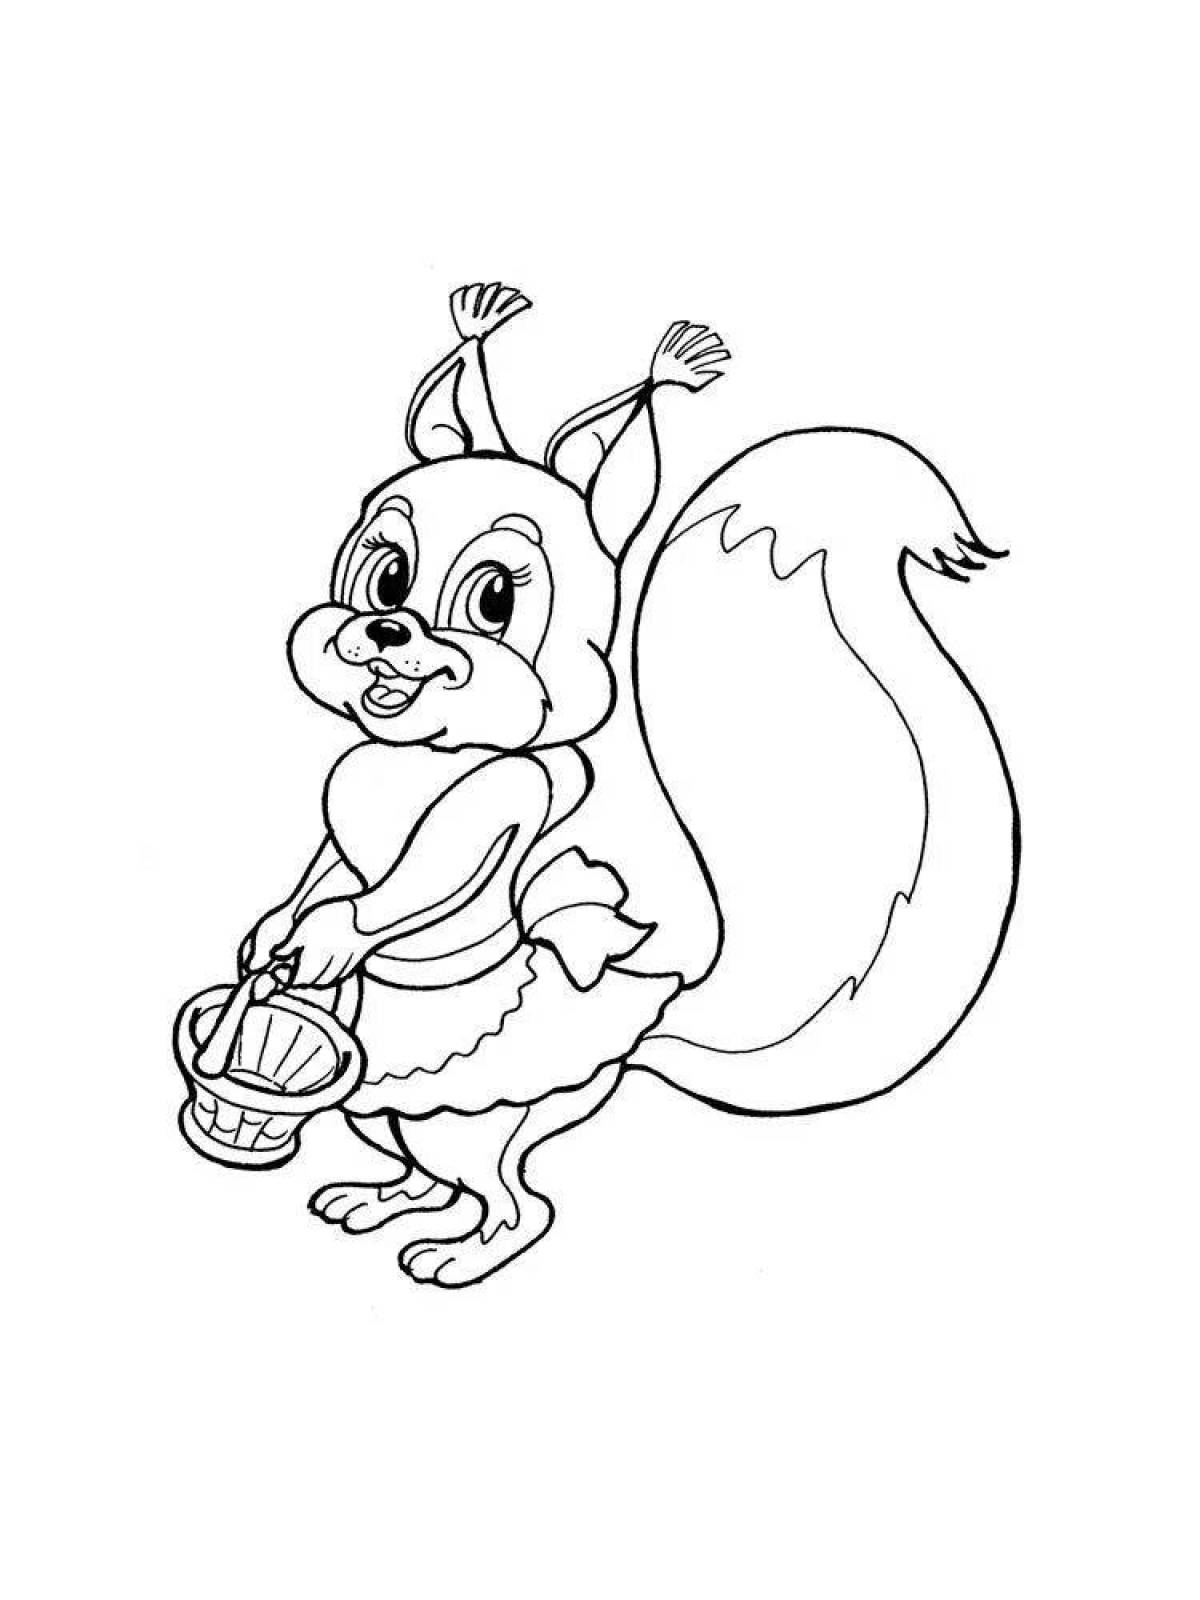 Fun coloring squirrel figurine